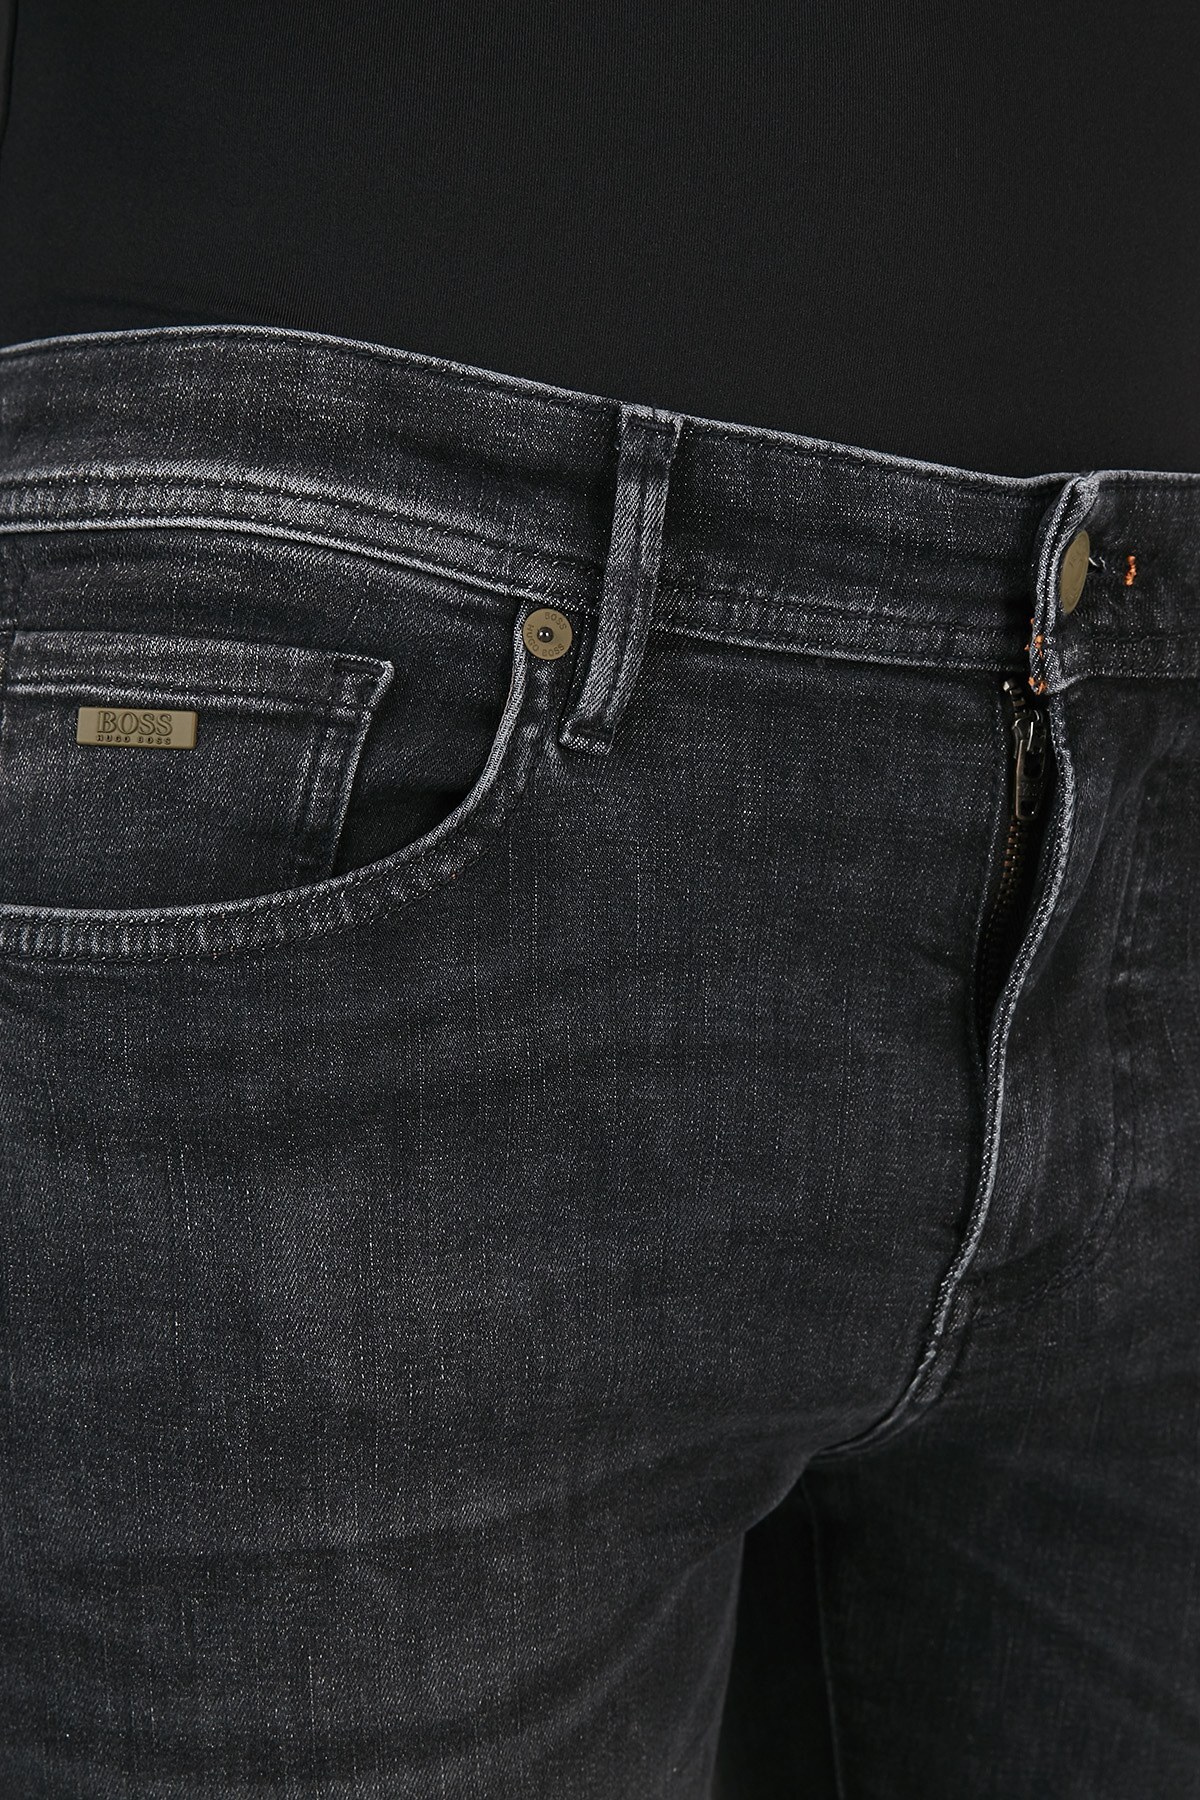 Hugo Boss Extra Slim Fit Cepli Pamuk Jeans Erkek Kot Pantolon 50453287 005 SİYAH